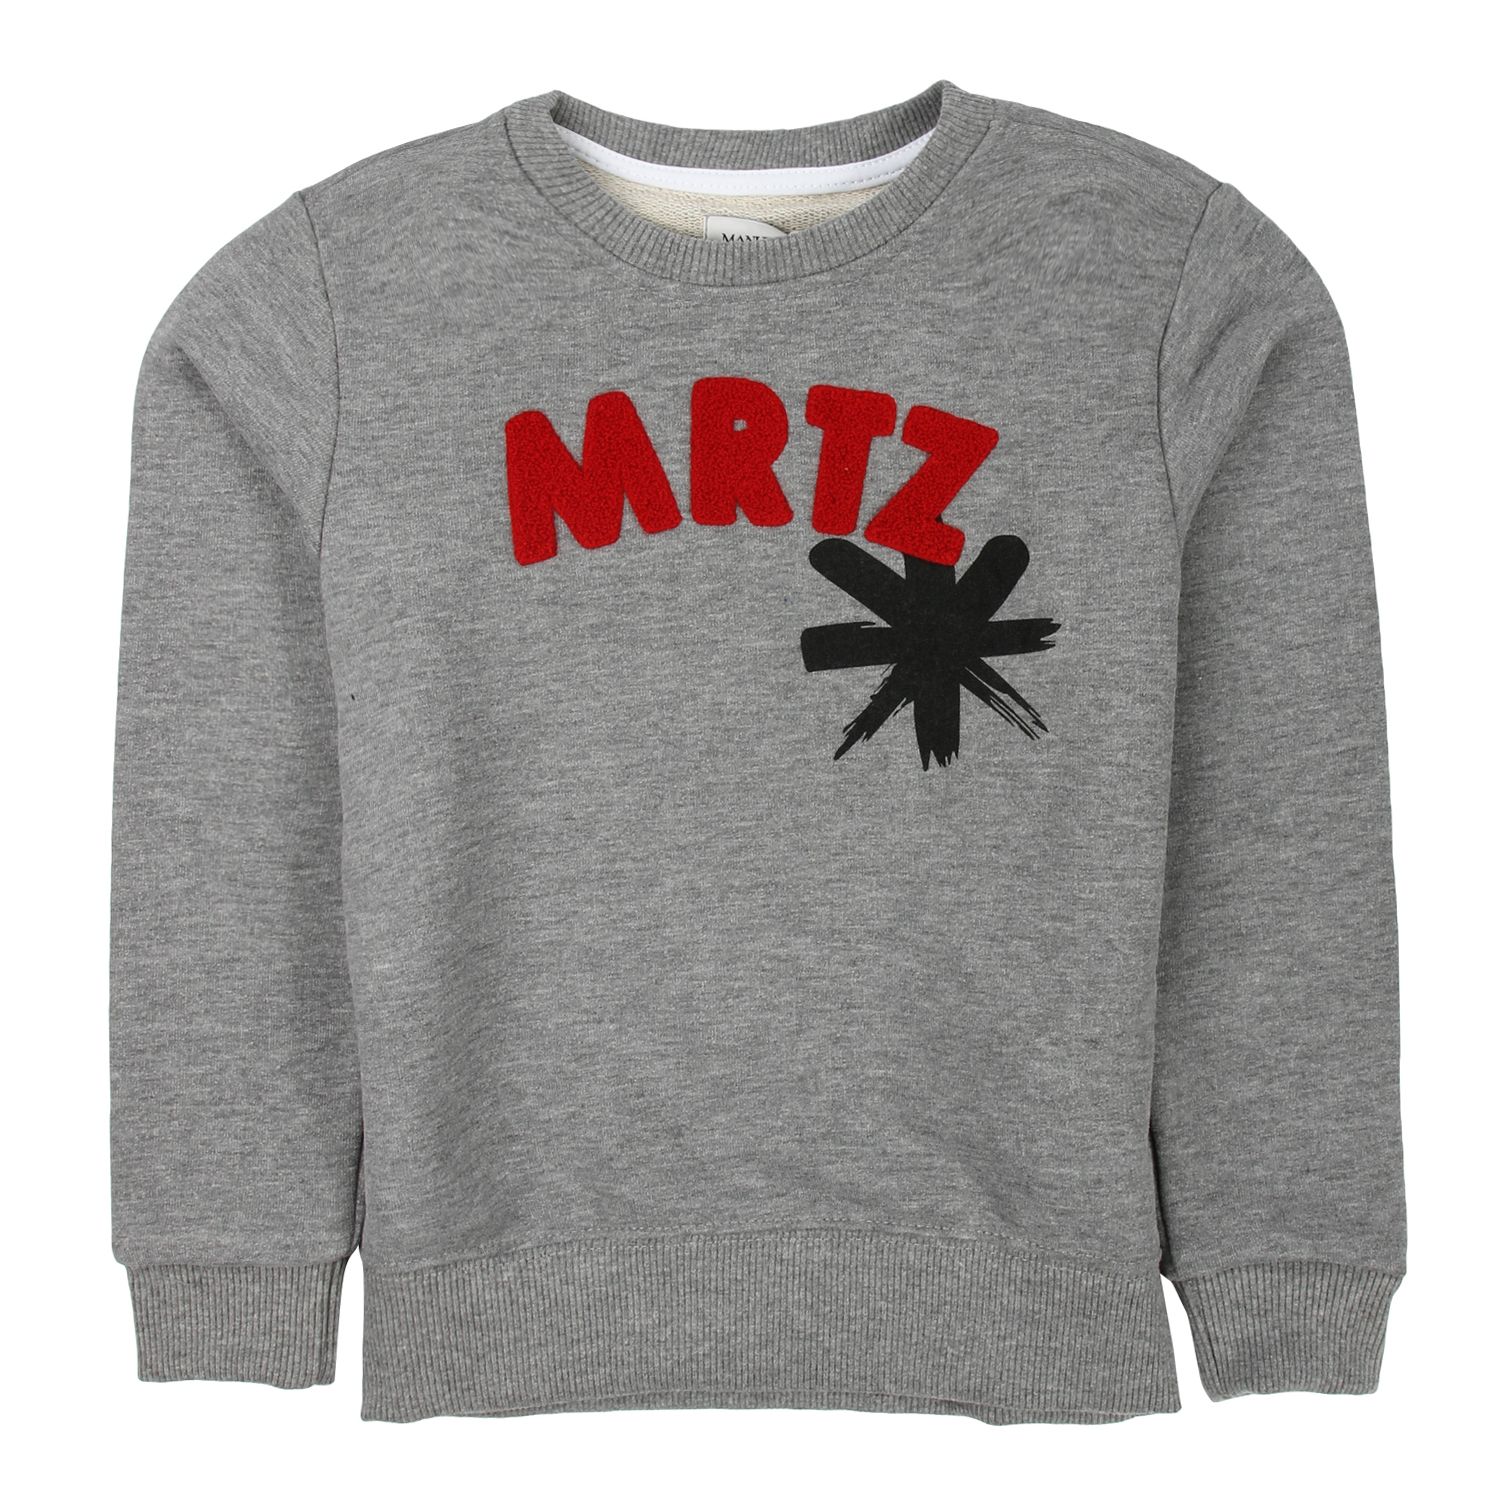 Manuel Ritz melange gray sweatshirt -Details long-sleeved sweatshirt with elastic cuffs, U-neck, gray melange bottom, front with detailed logo visible in the center, basic back -Hand wash